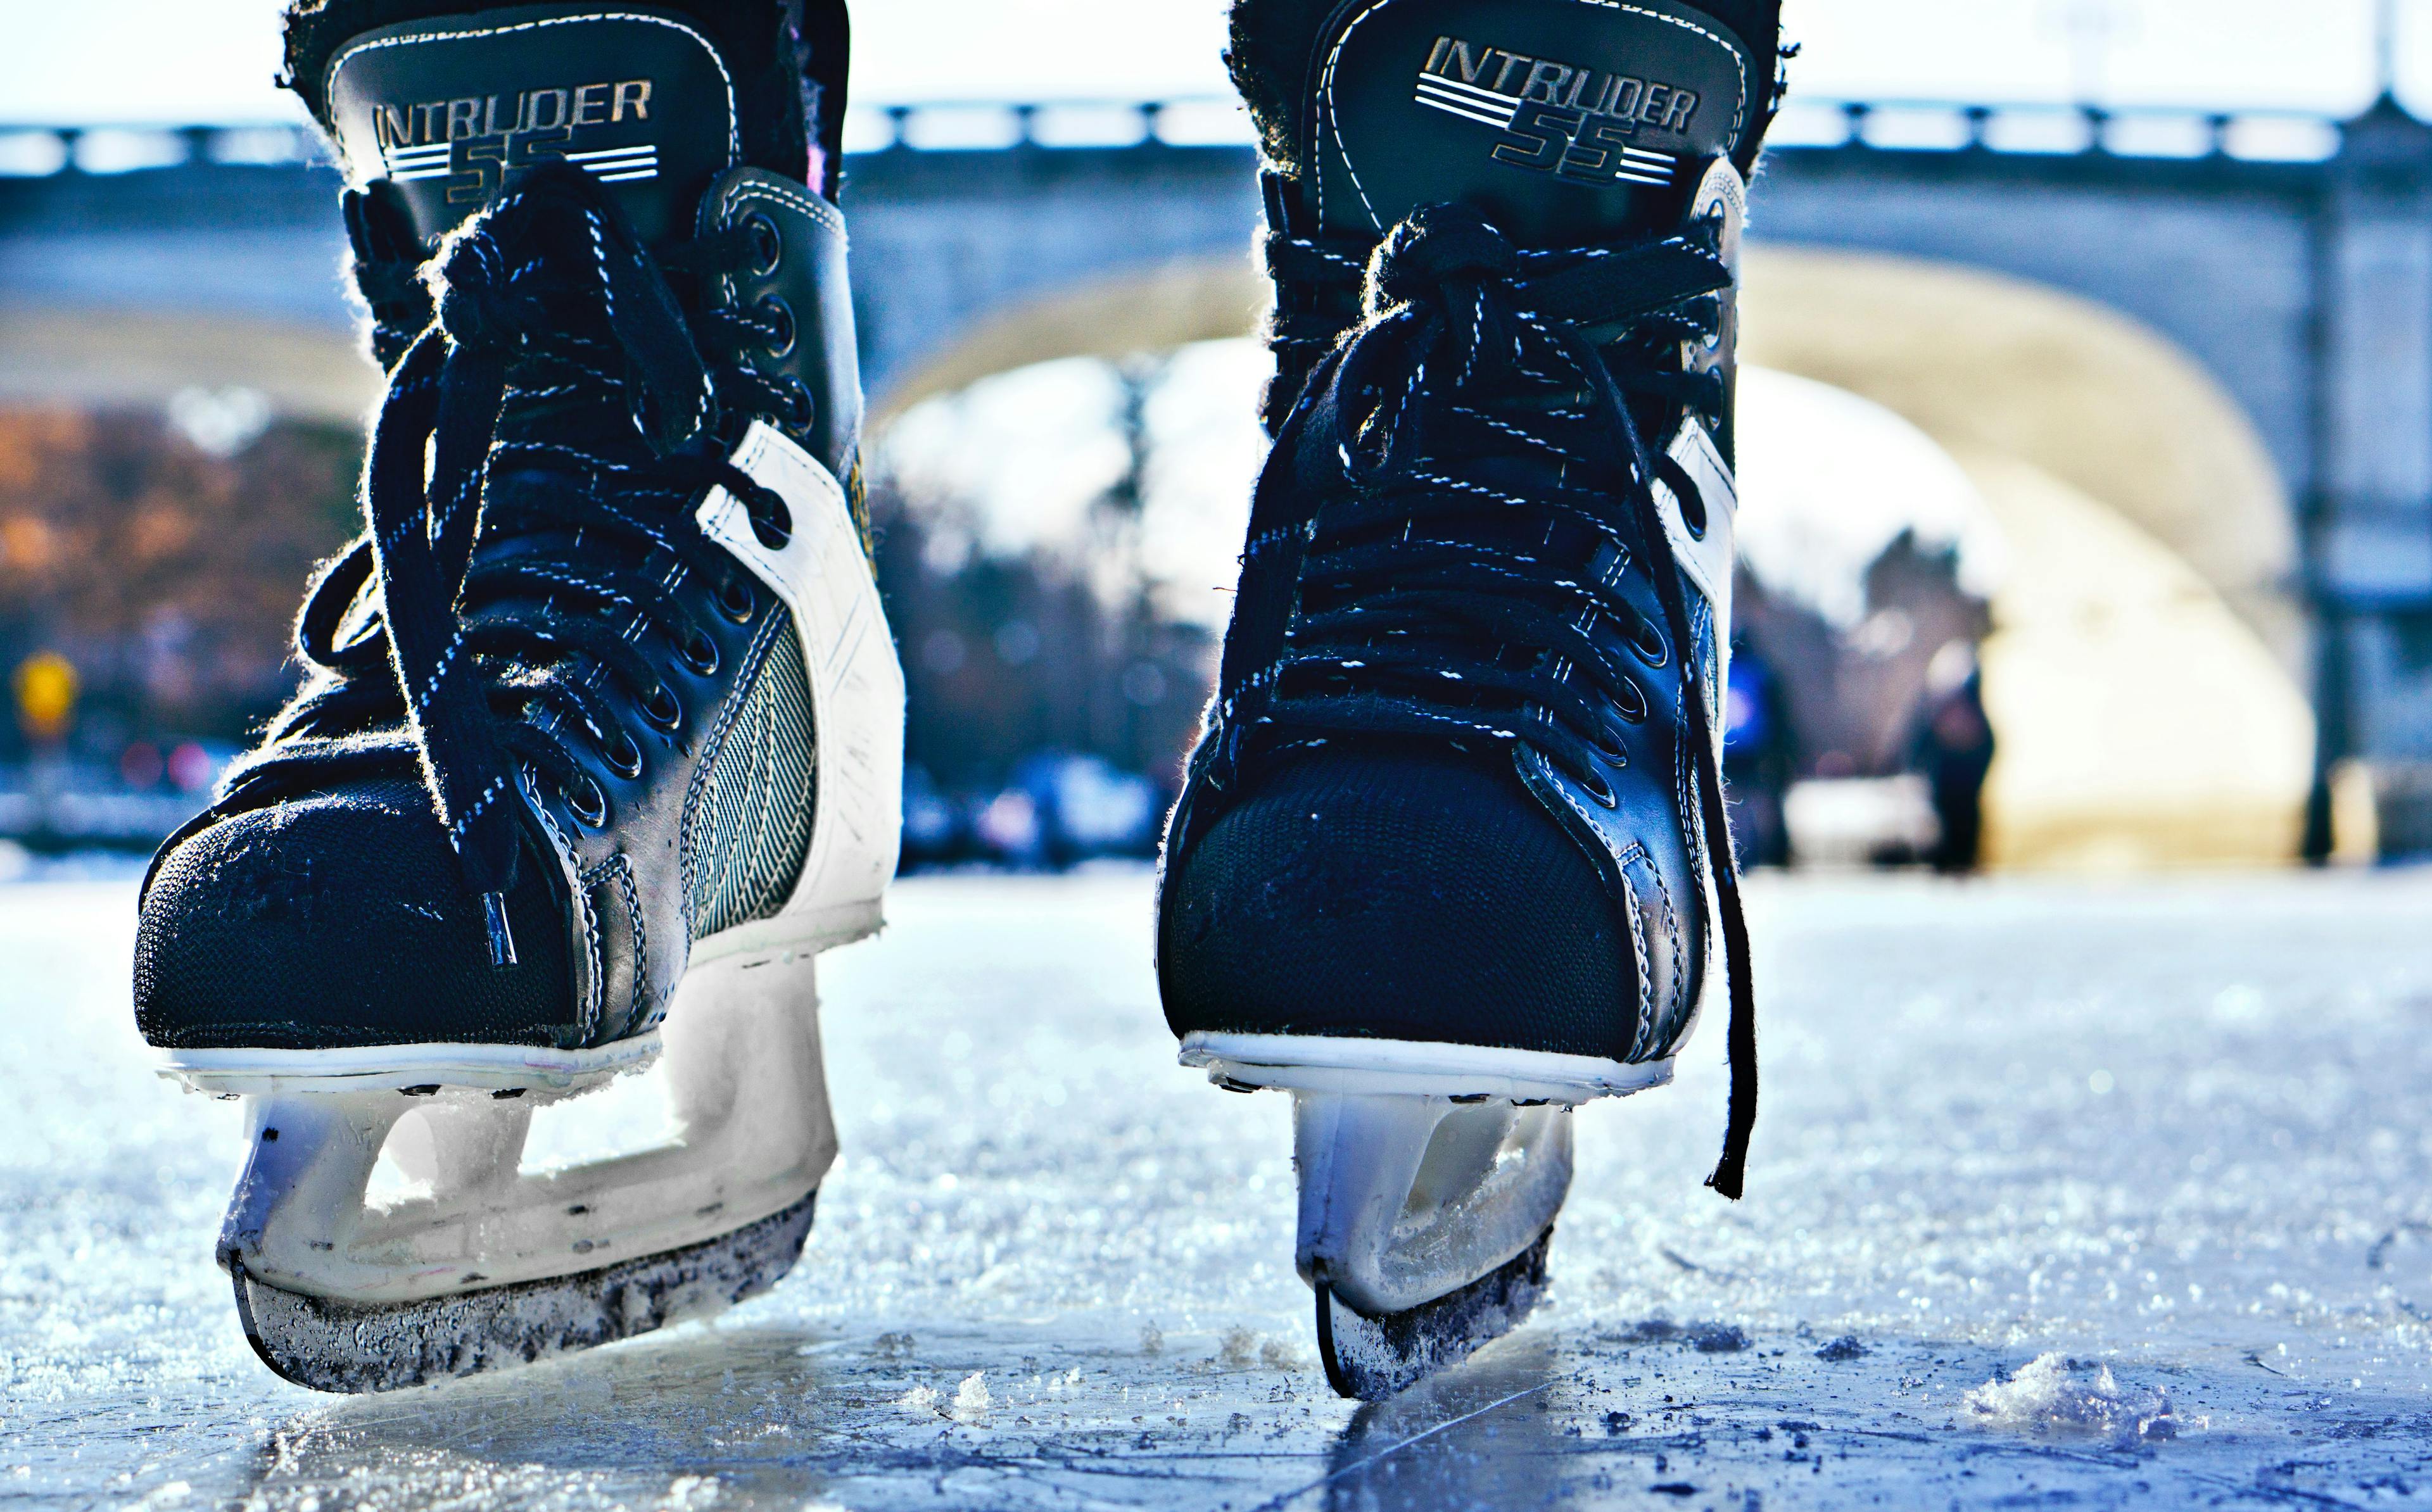 Close up photo of some ice skates skating